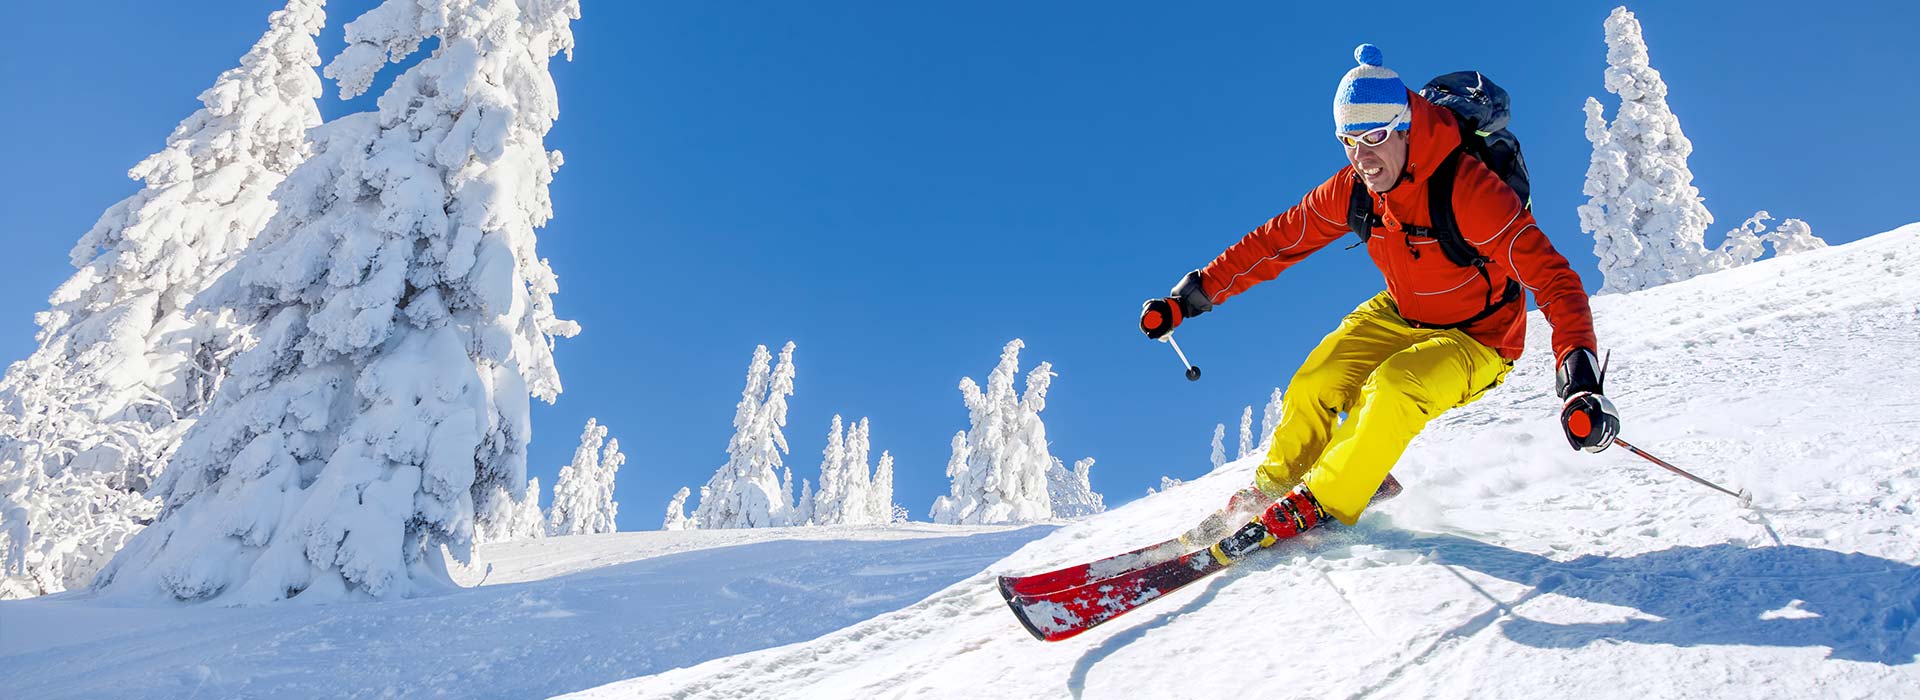 ski-rentals-in-federal-way-kent-wa | Moxies Ski and Snowboards